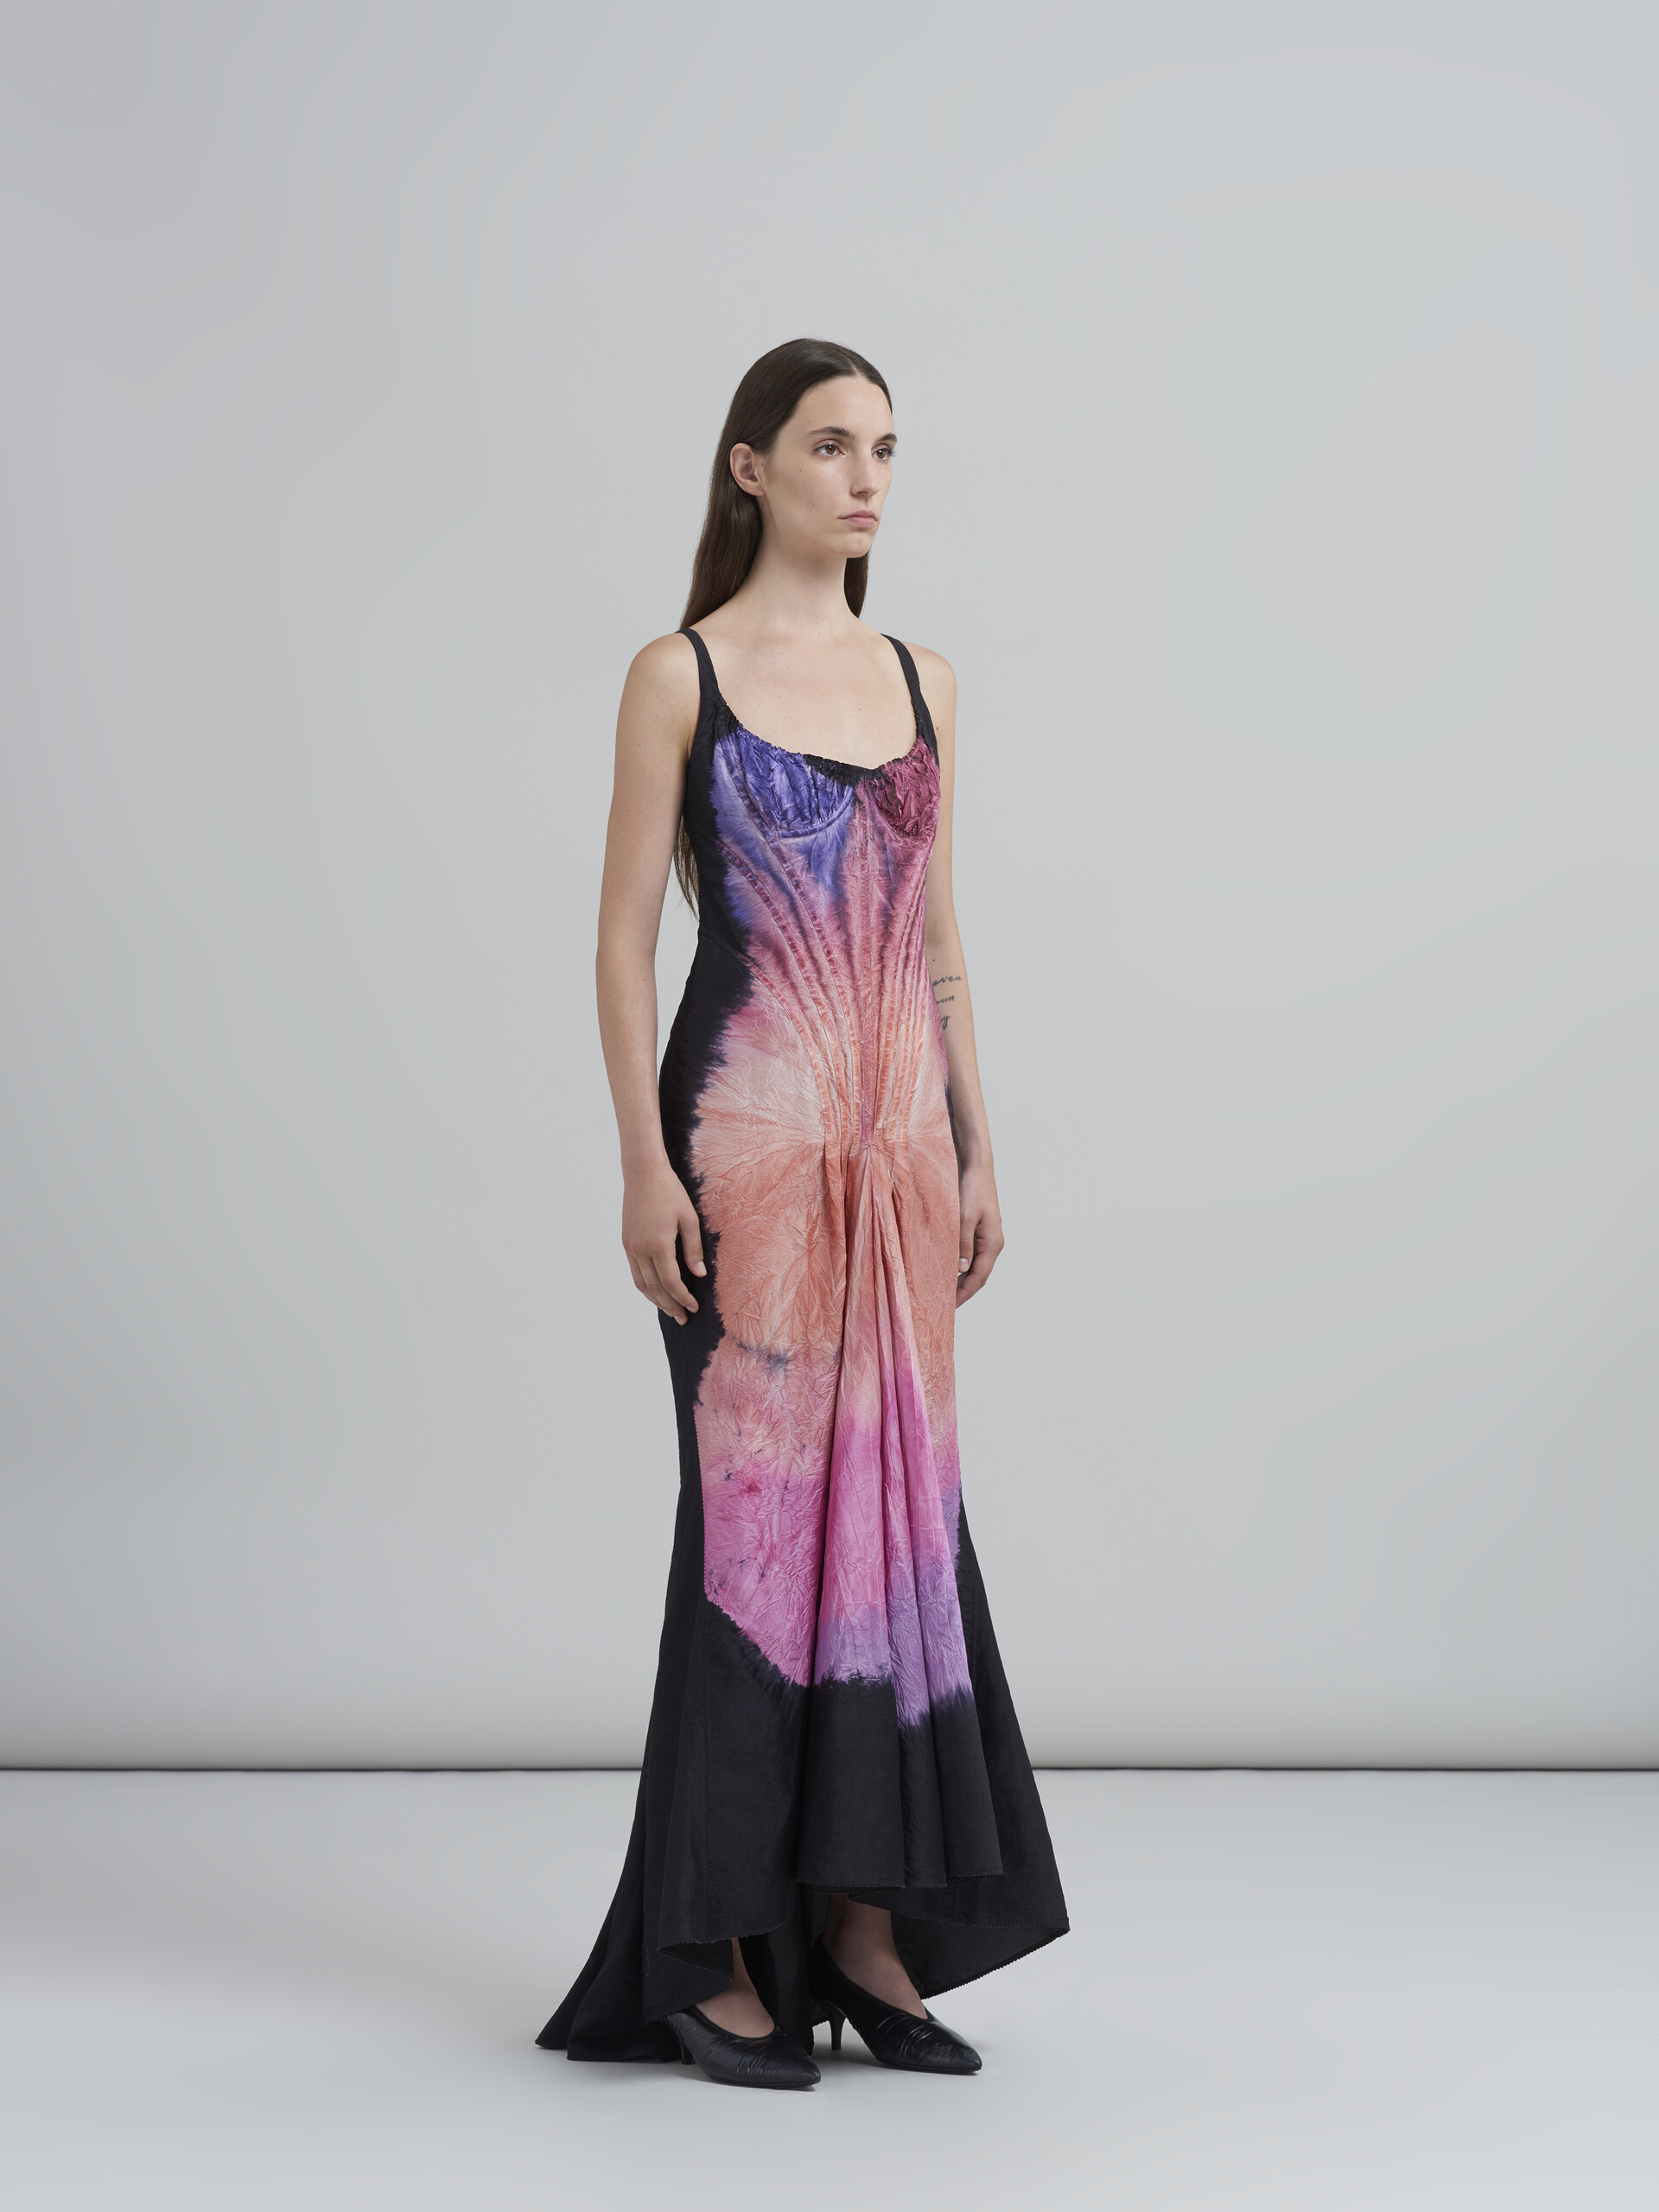 Vestido de tafetán de seda con teñido arco iris - Vestidos - Image 6